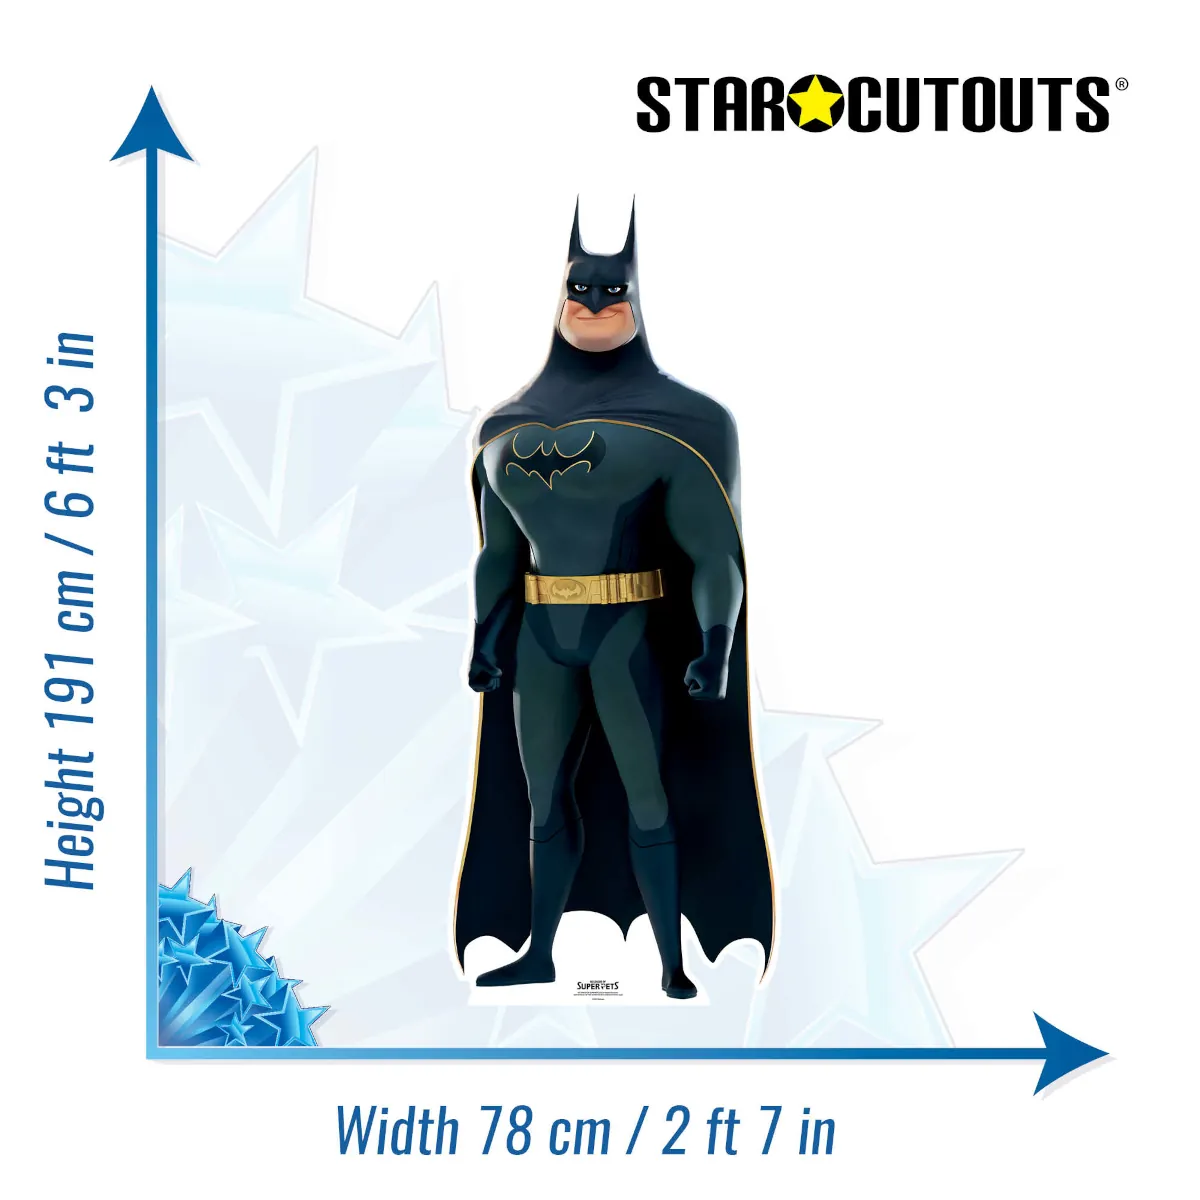 SC4071 Batman (DC League of Super Pets) Official Lifesize + Mini Cardboard Cutout Standee Size